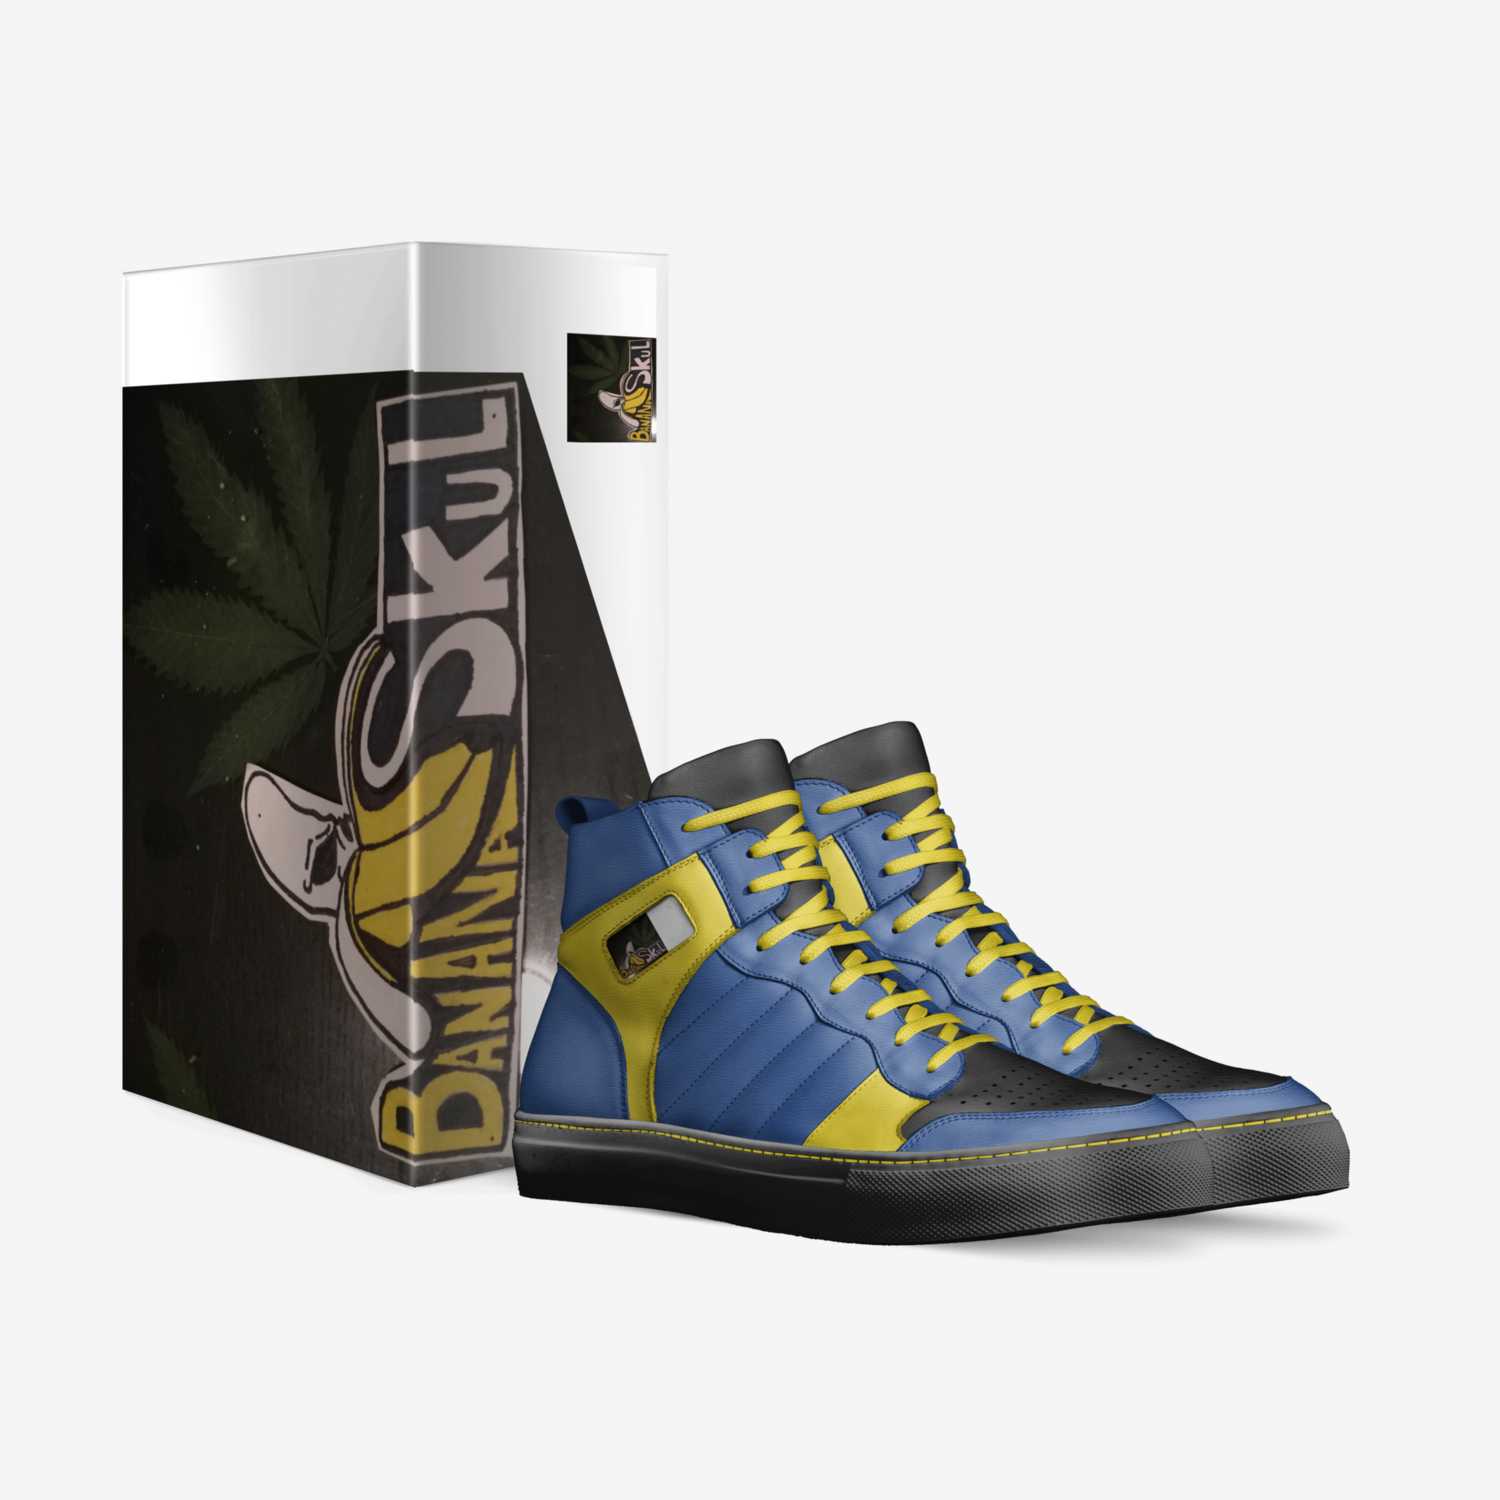 BananaSkul custom made in Italy shoes by Brad Smith | Box view